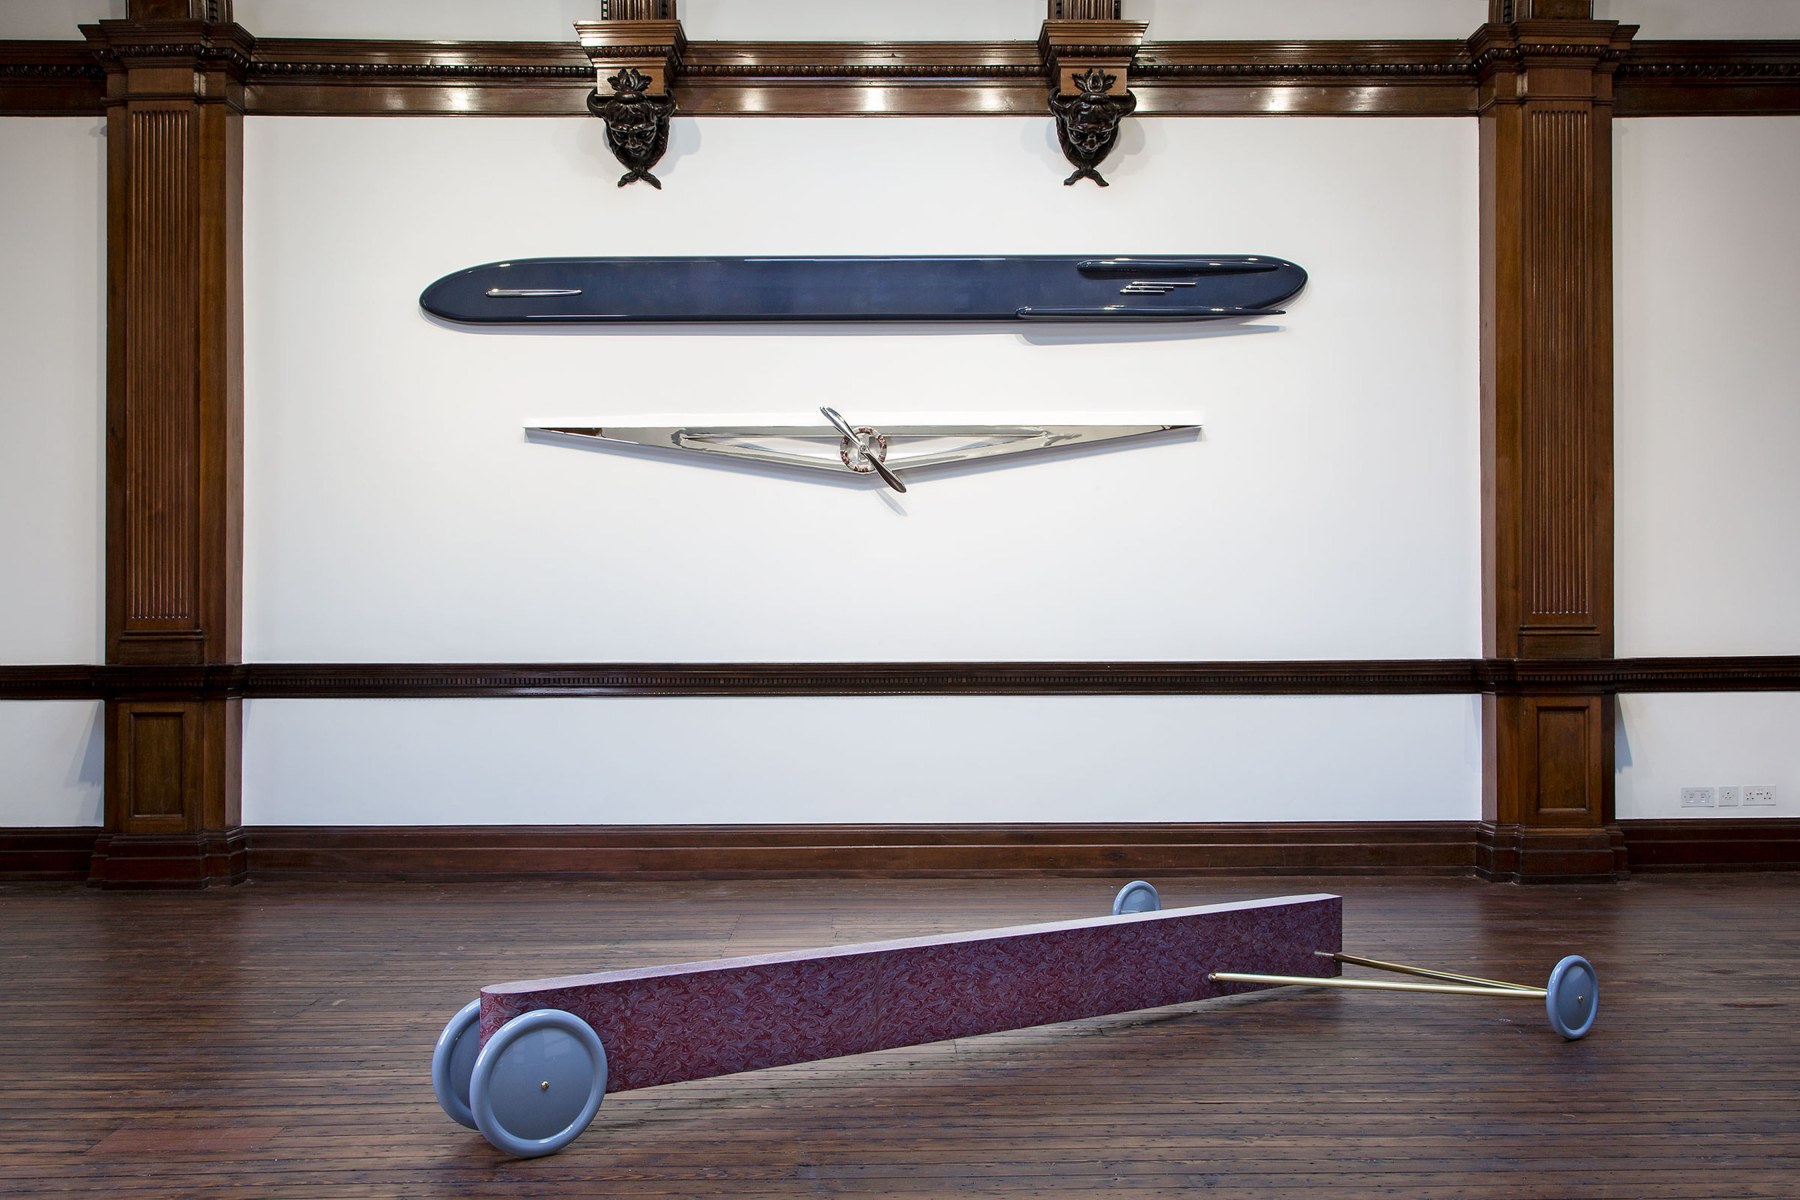 GIANNI PIACENTINO, WORKS 1965-2006, London, 2015, Installation Image 3